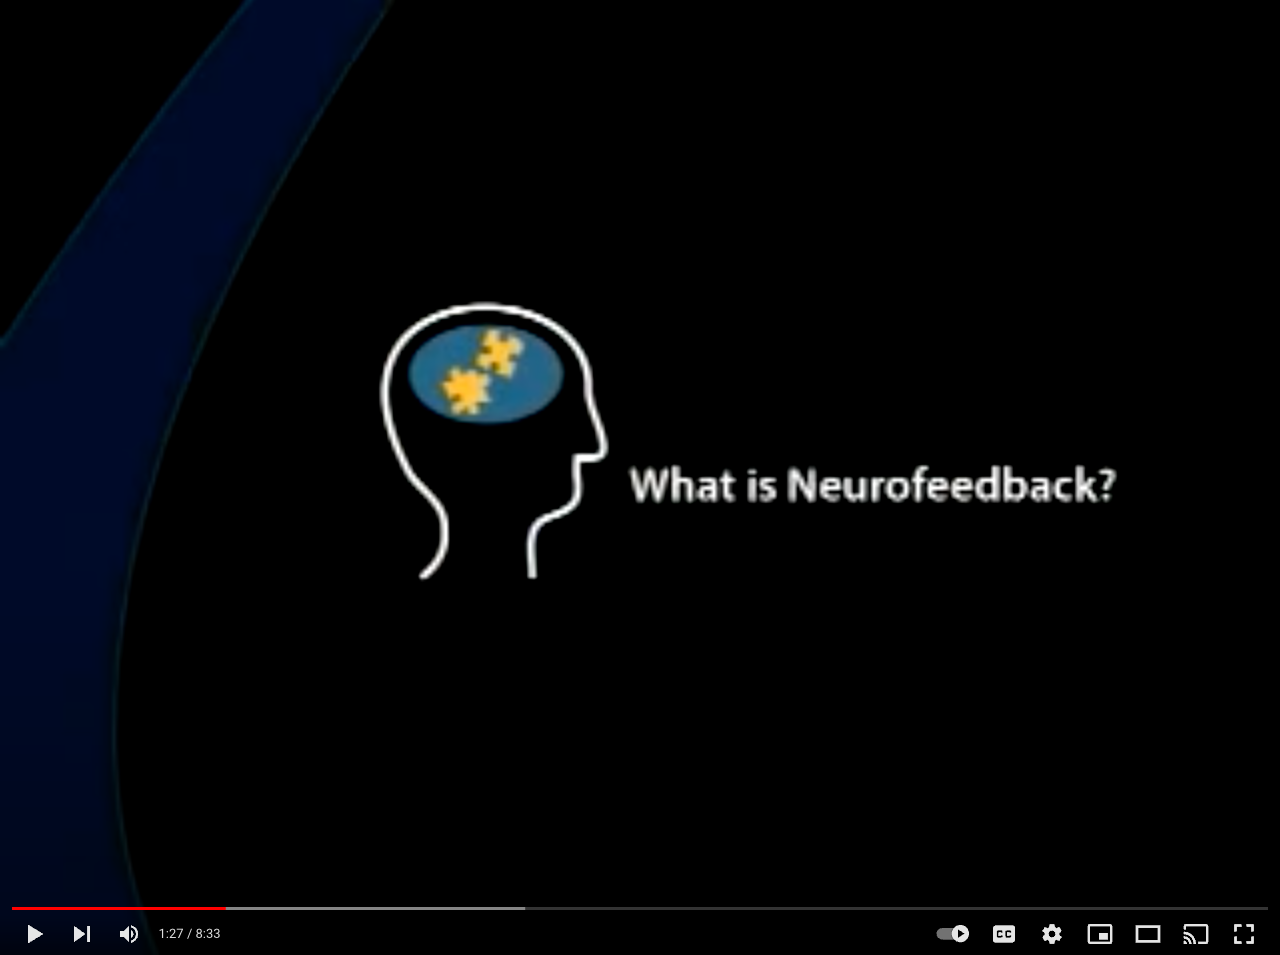 Overview of Neurofeedback